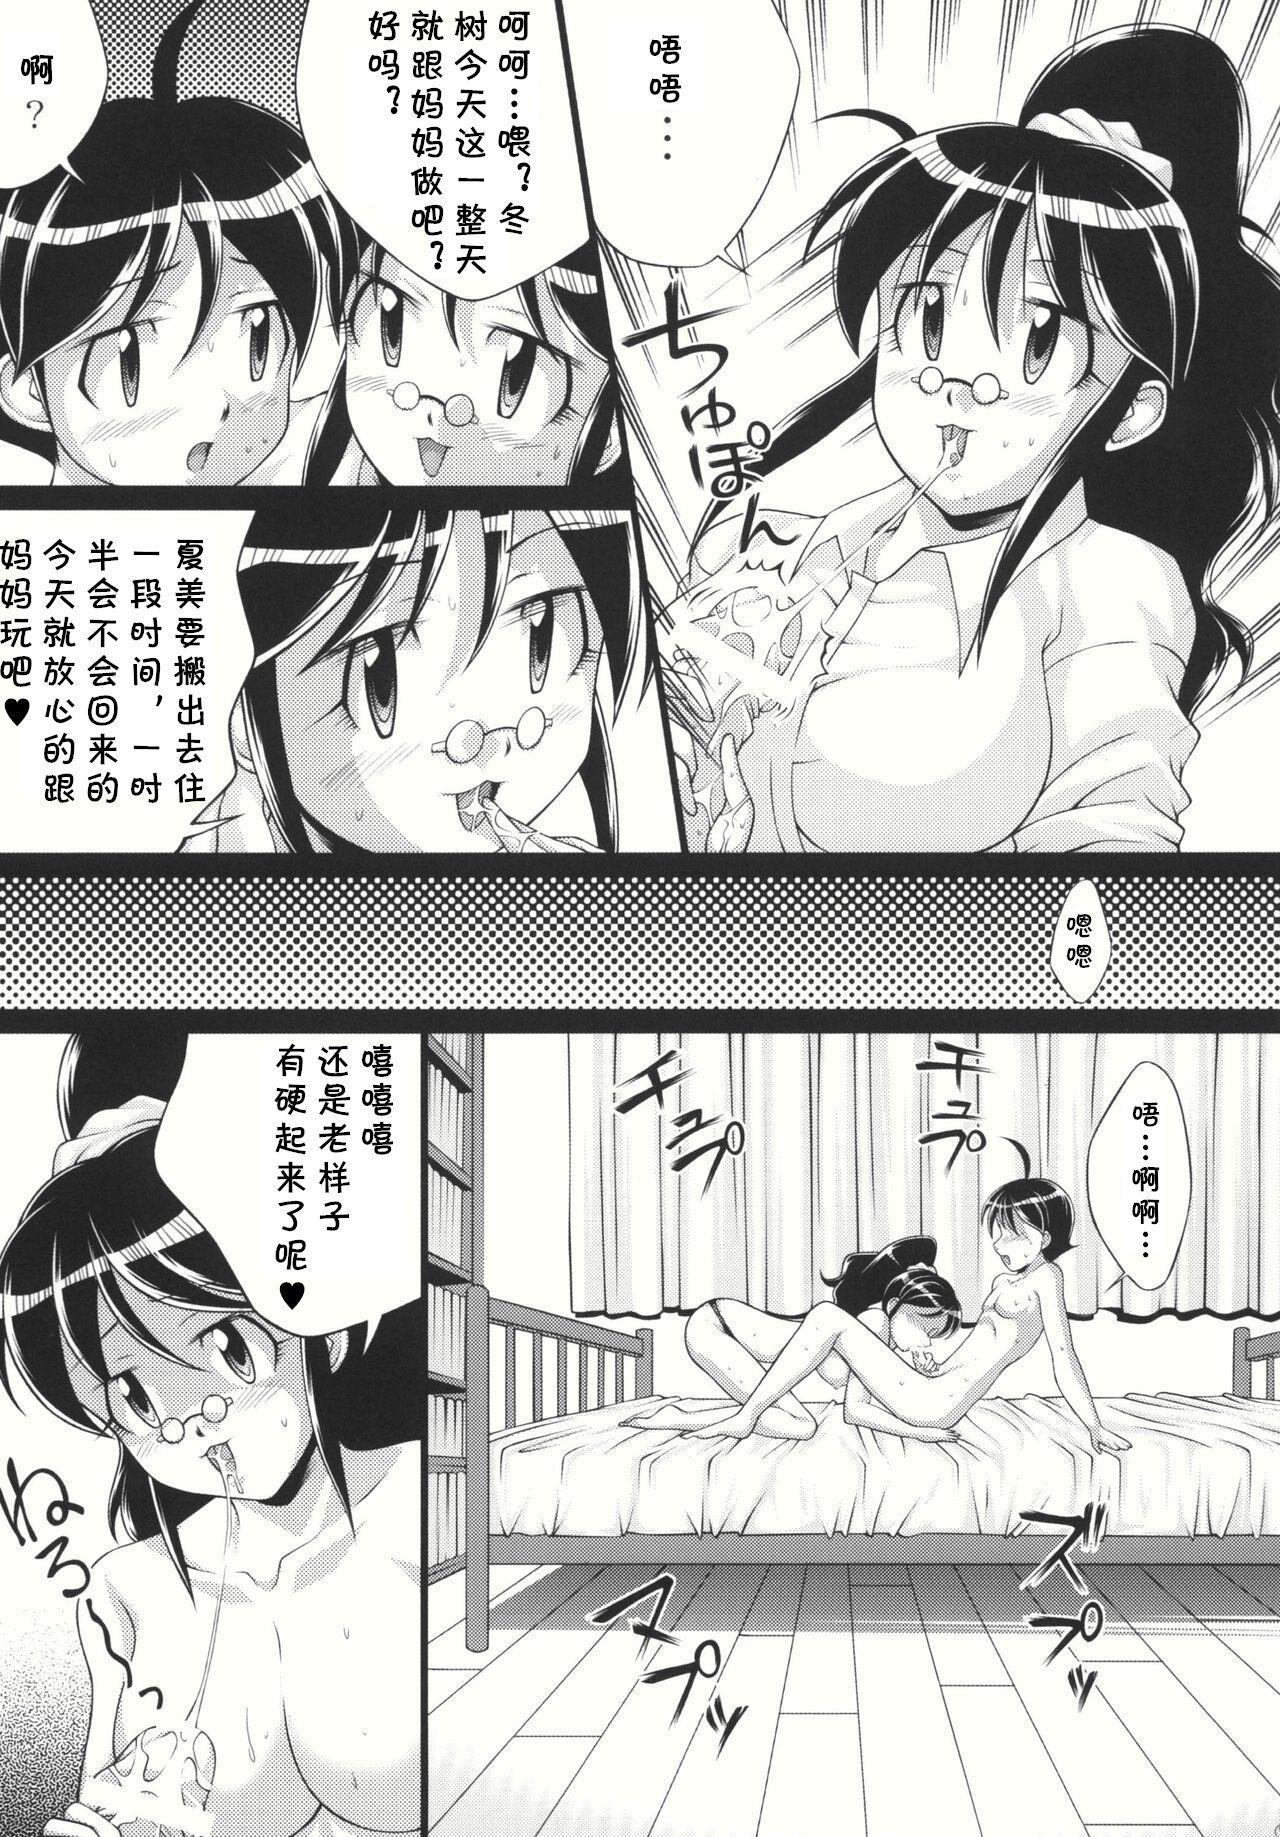 Little Chikyuujin Maruhi Seitai Chousa Houkokusho 4 - Keroro gunsou | sgt. frog Les - Page 9